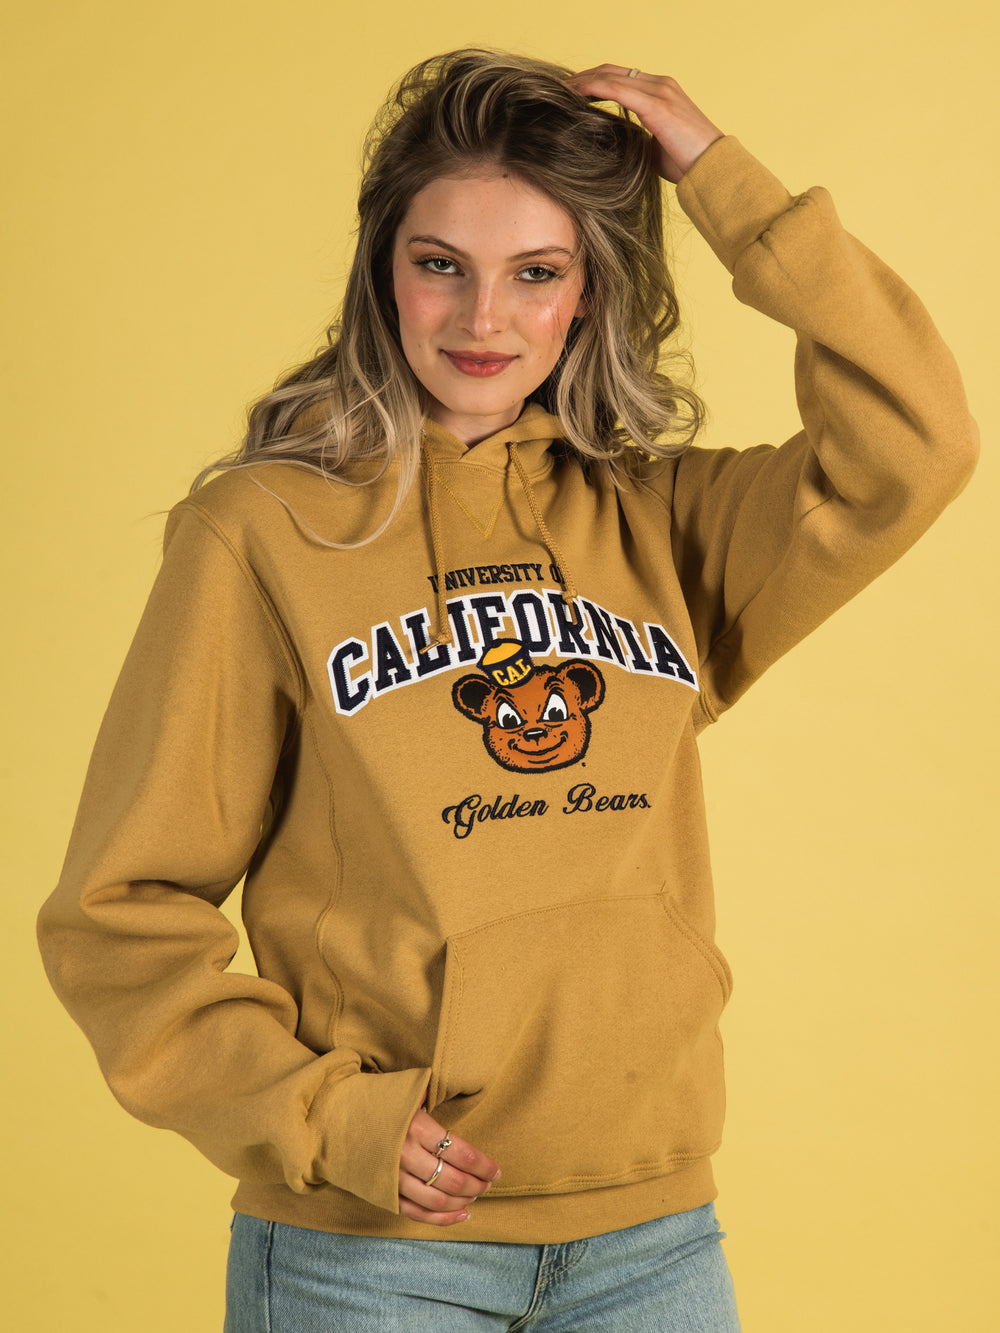 University of California Ladies Sweatshirts, California Golden